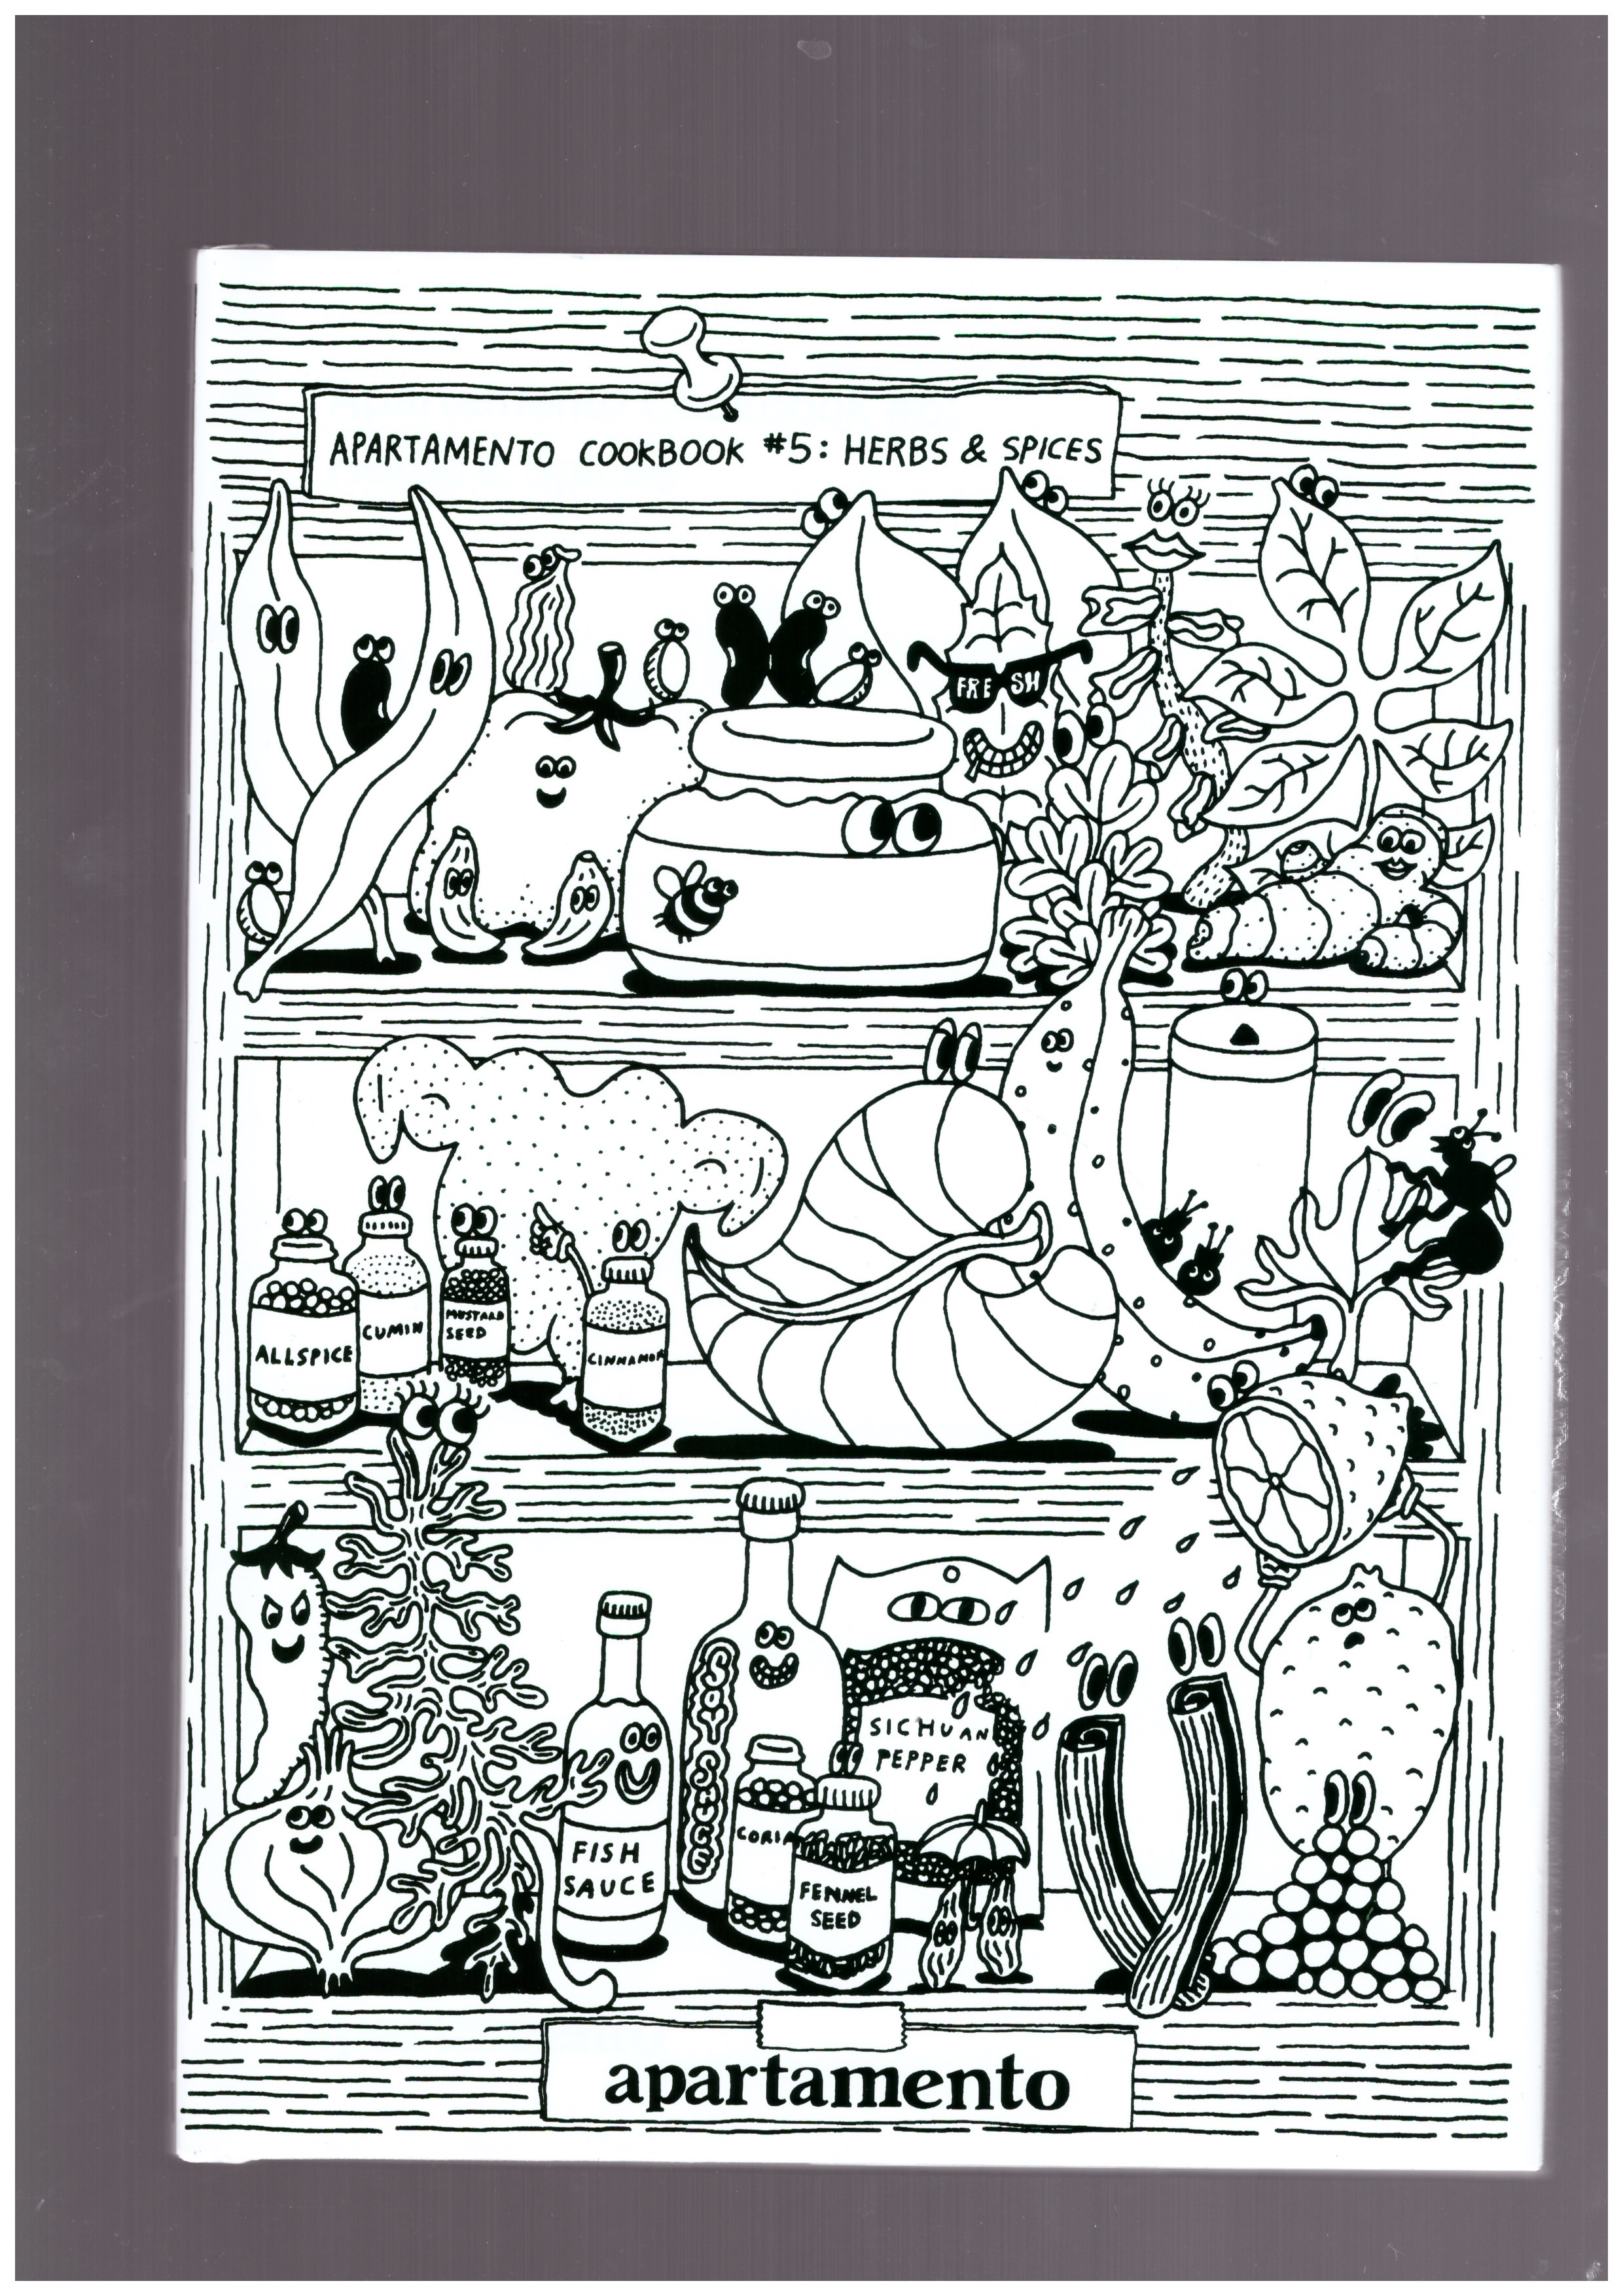 WHITEHEAD, Robbie; WILLIS, Madeleine (eds.) - Apartamento Cookbook #5: Herbs & Spices